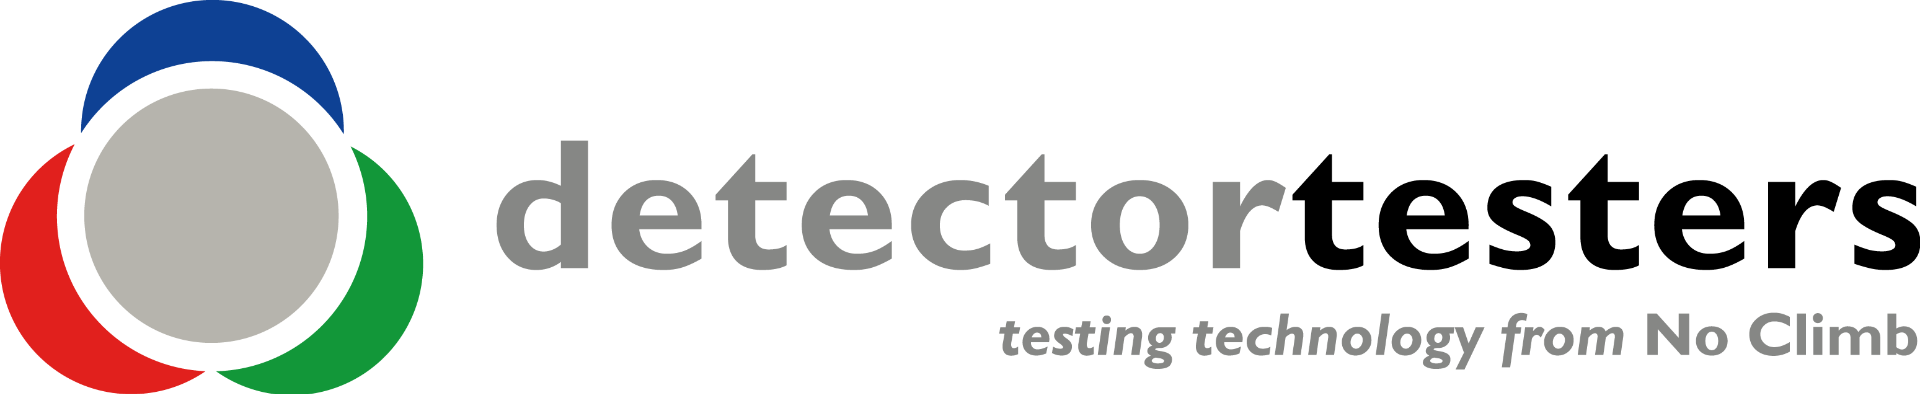 detectortesters_logo.png